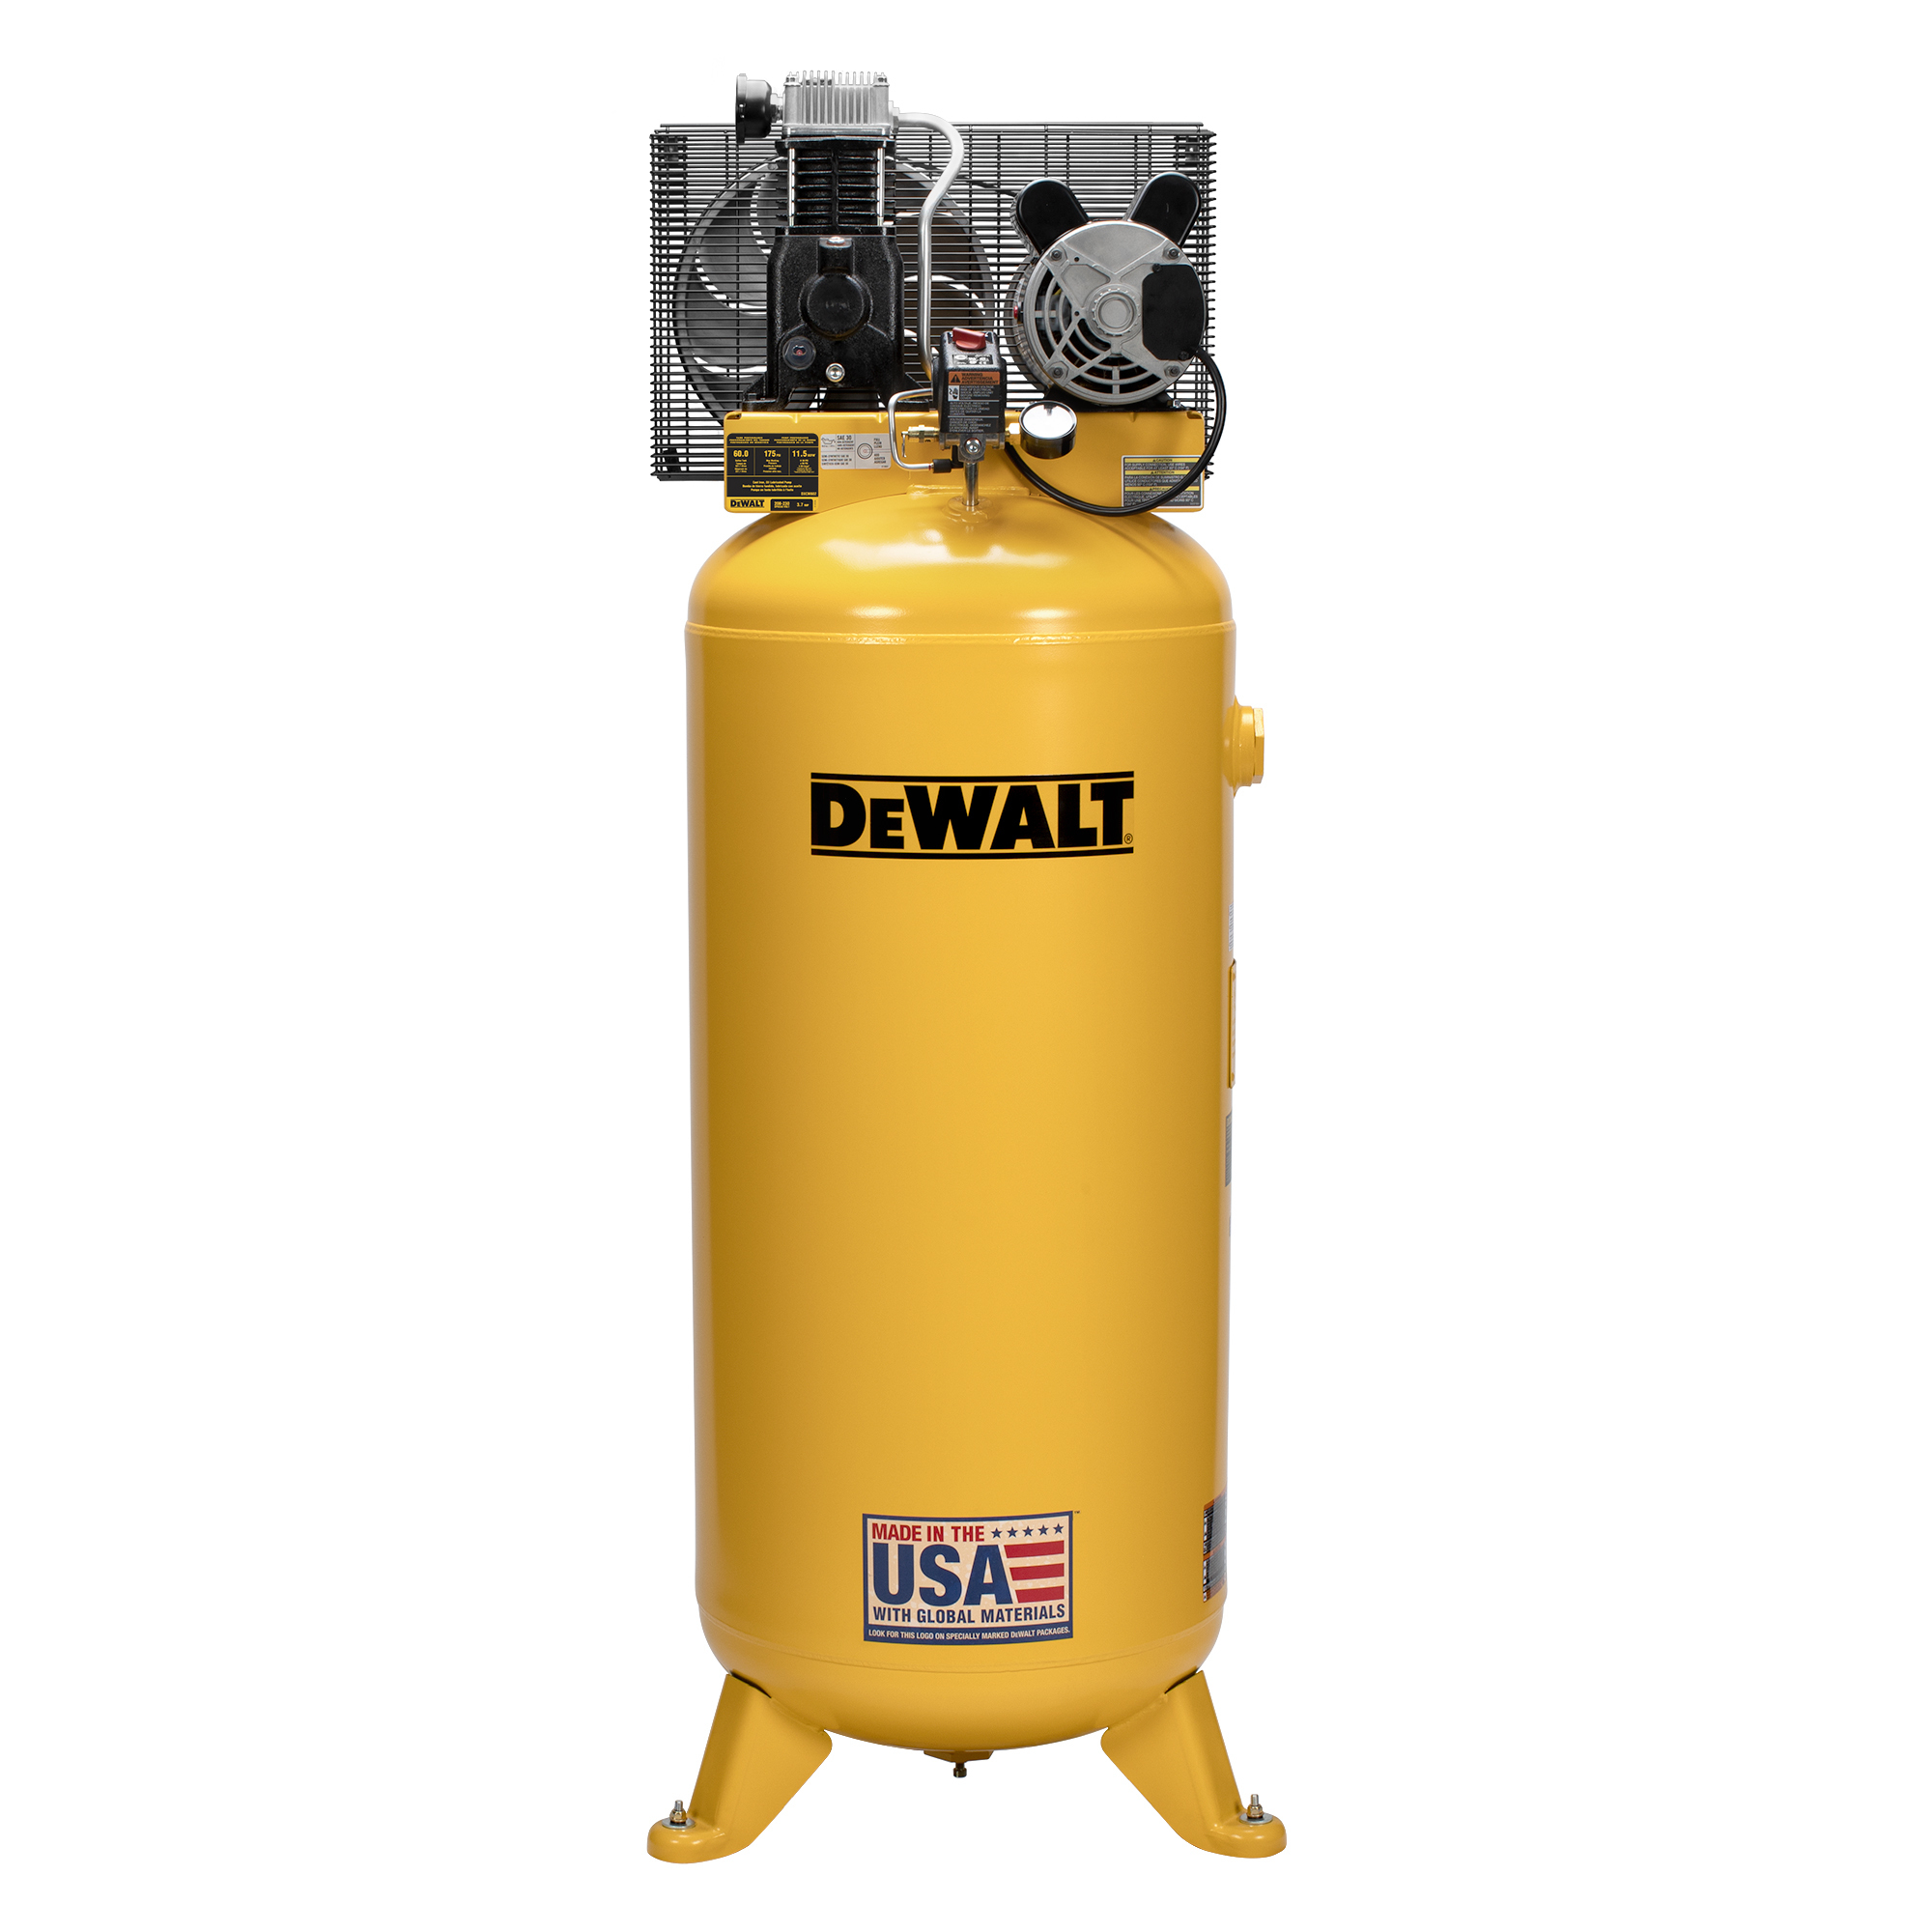 DEWALT 60 Gallon Air Compressor, Vertical Single Stage 175 PSI, 3.7 HP,, Model DXCM602